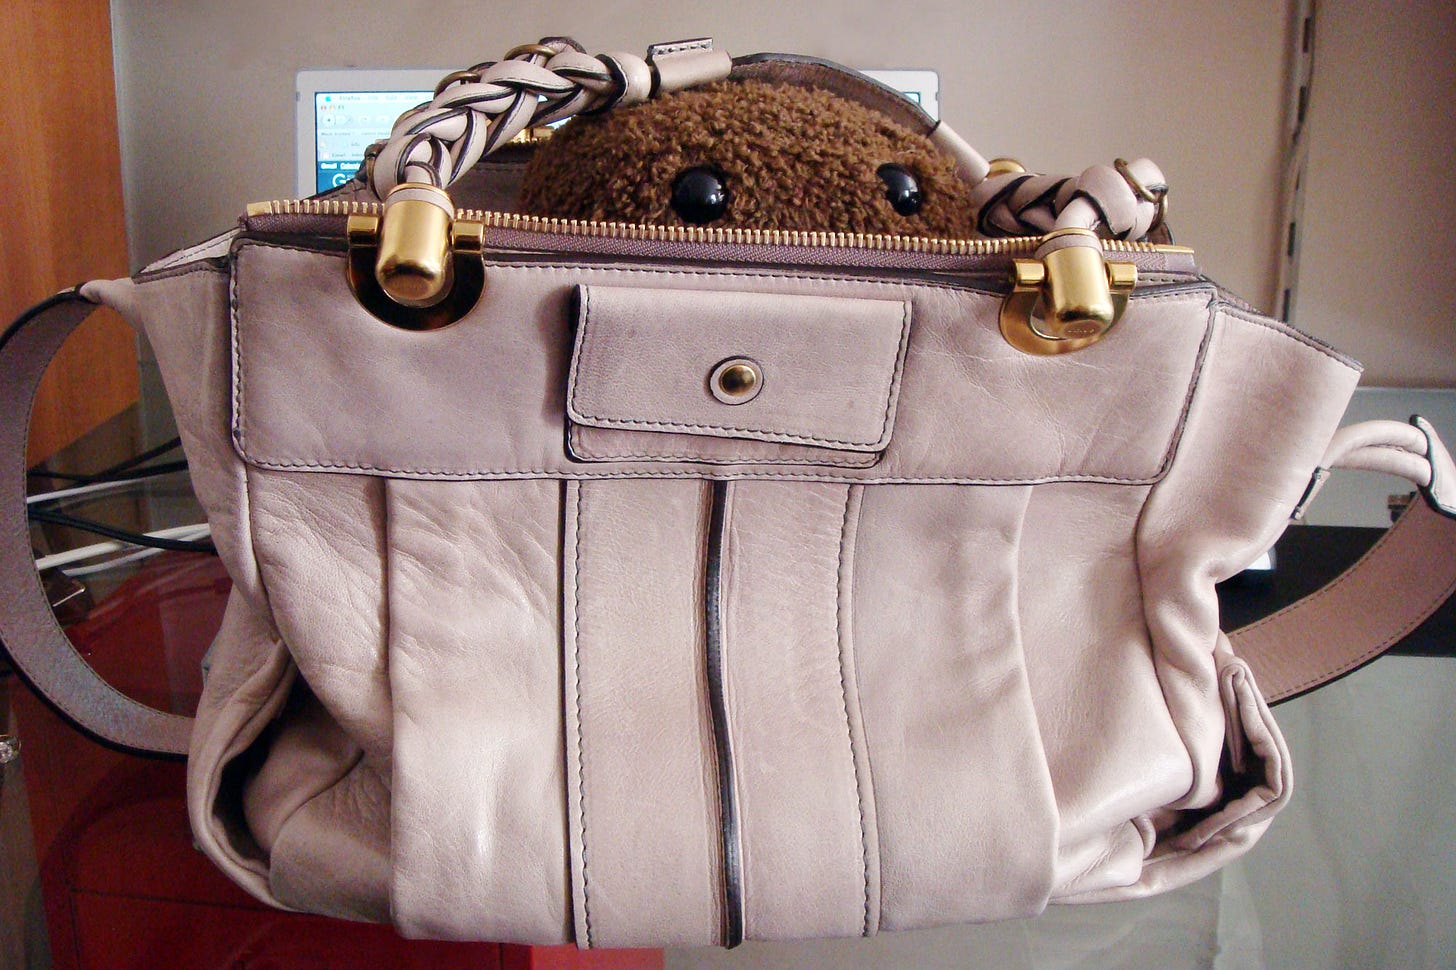 Stuffed Domokun in a designer handbag